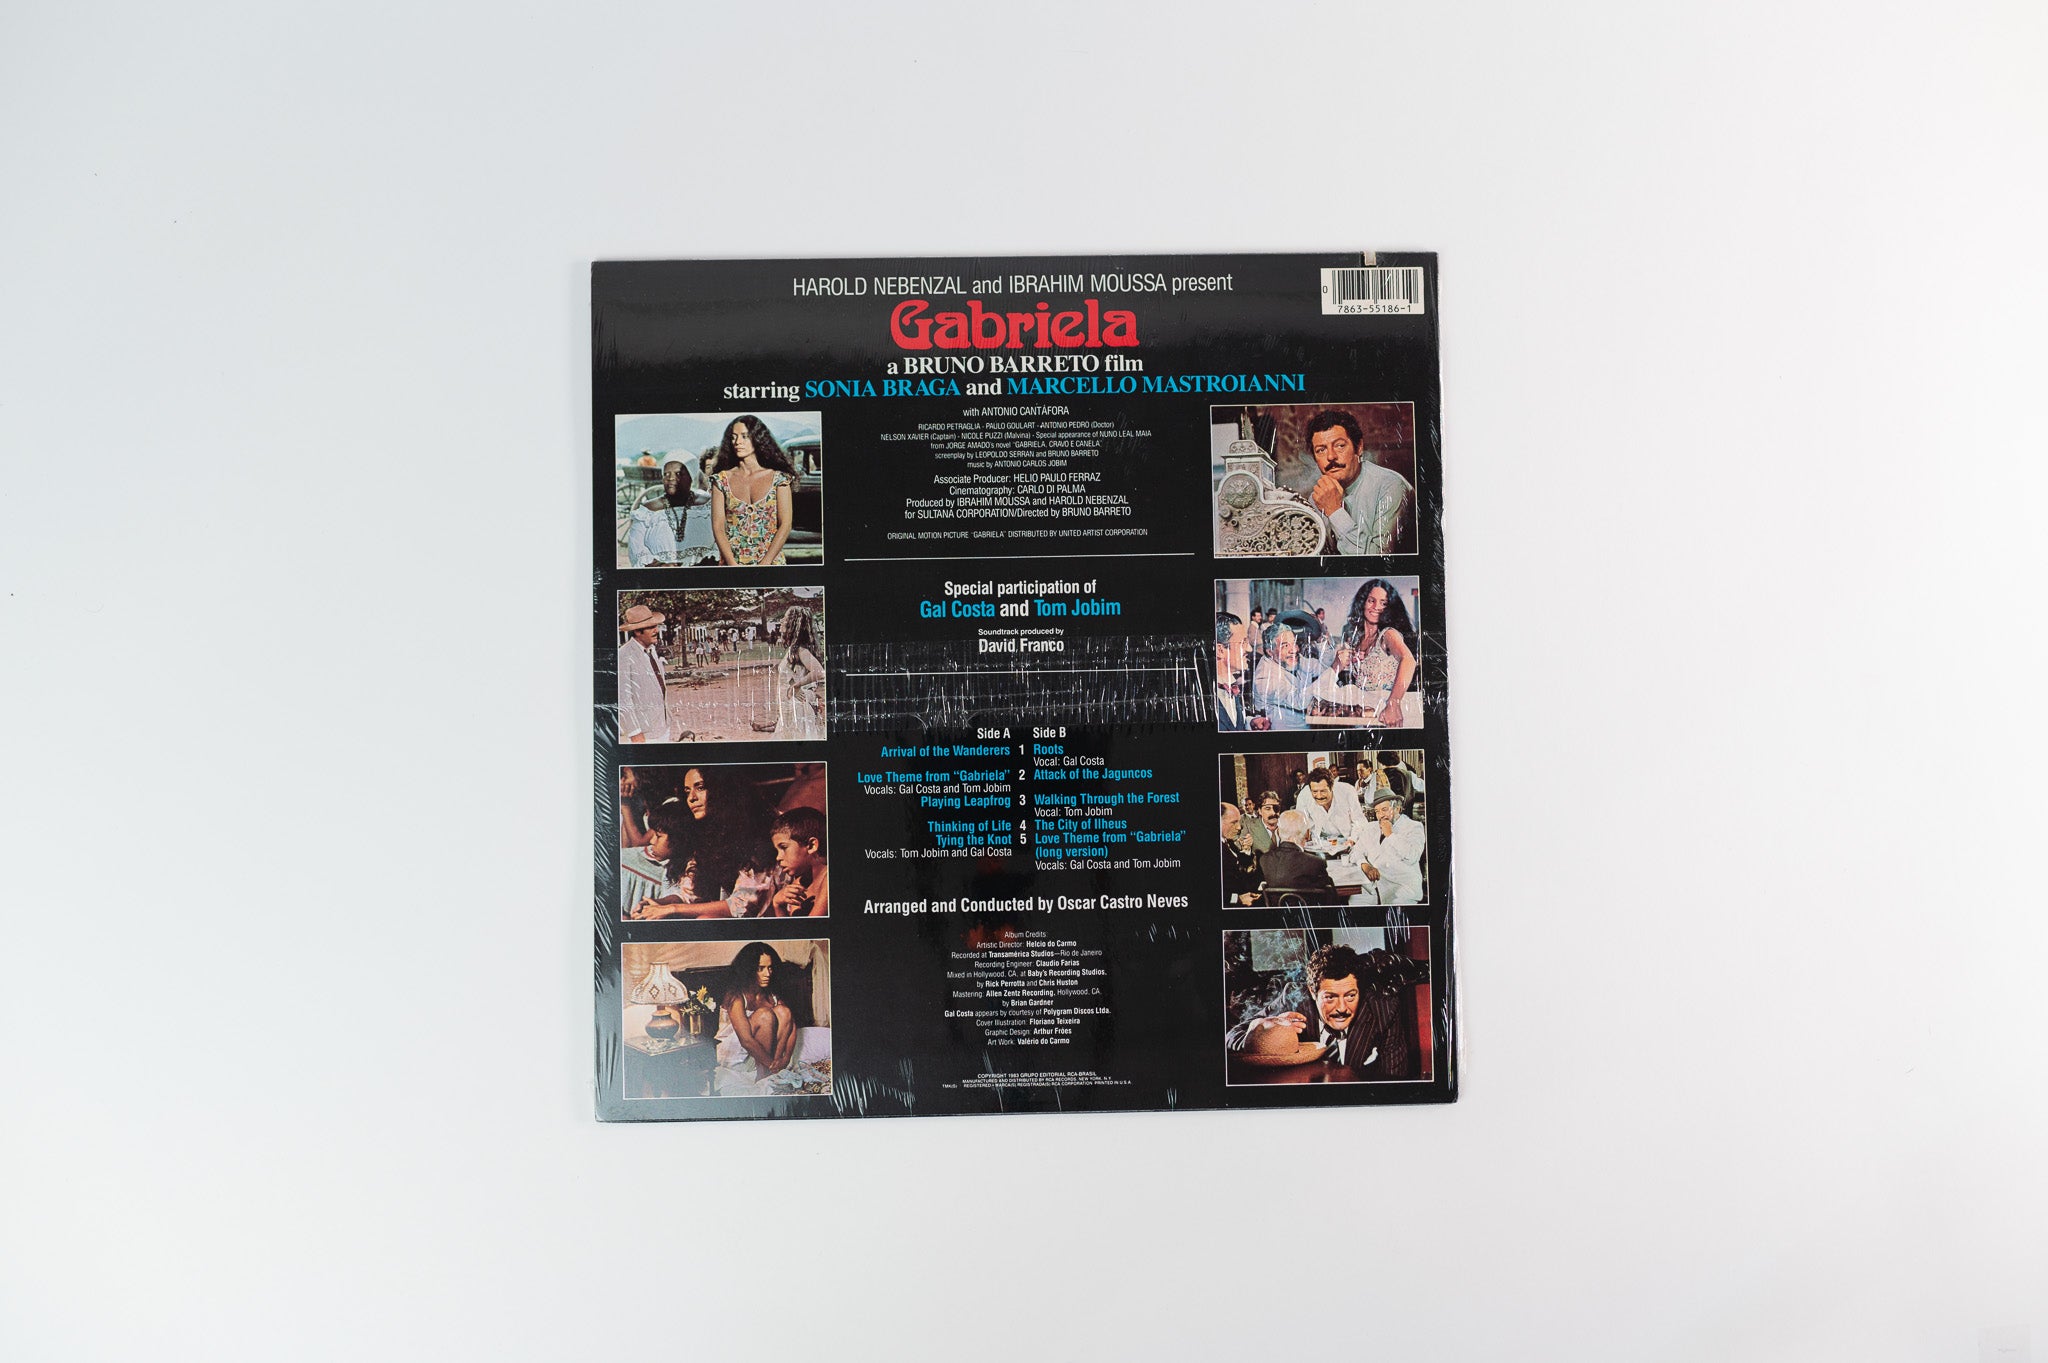 Antonio Carlos Jobim - Gabriela (Original Soundtrack) on RCA Sealed